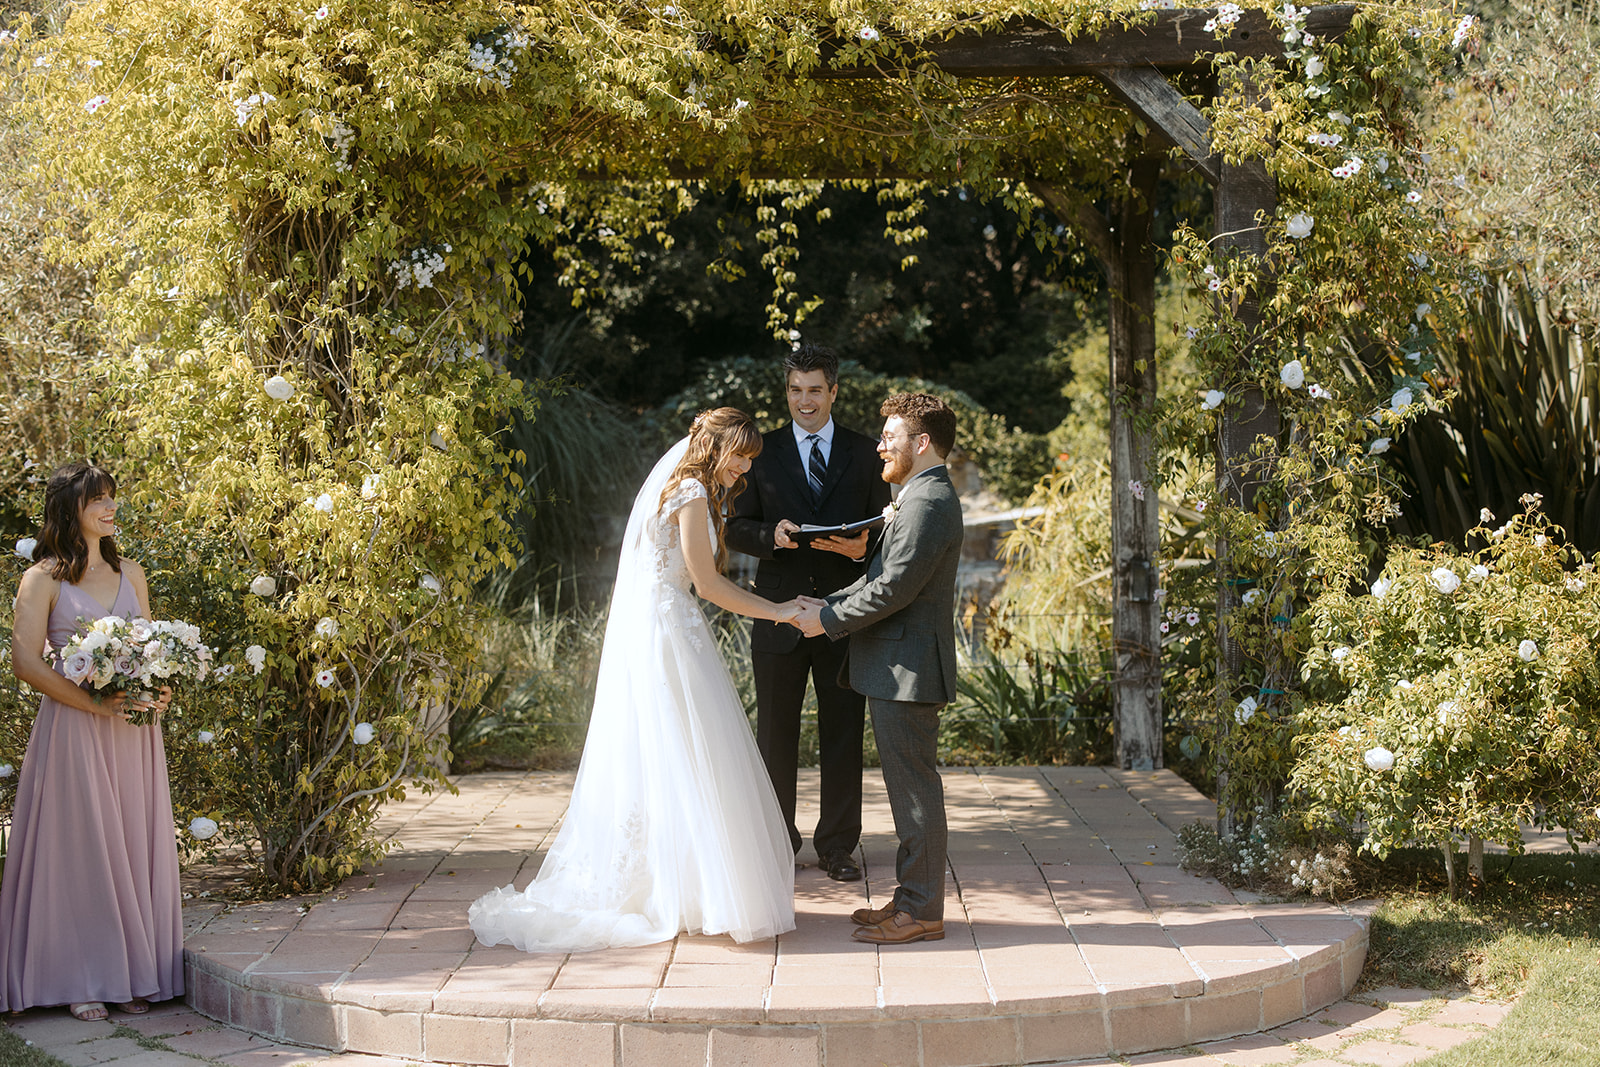 Bride and groom laughing during wedding ceremony at La Arboleda in California